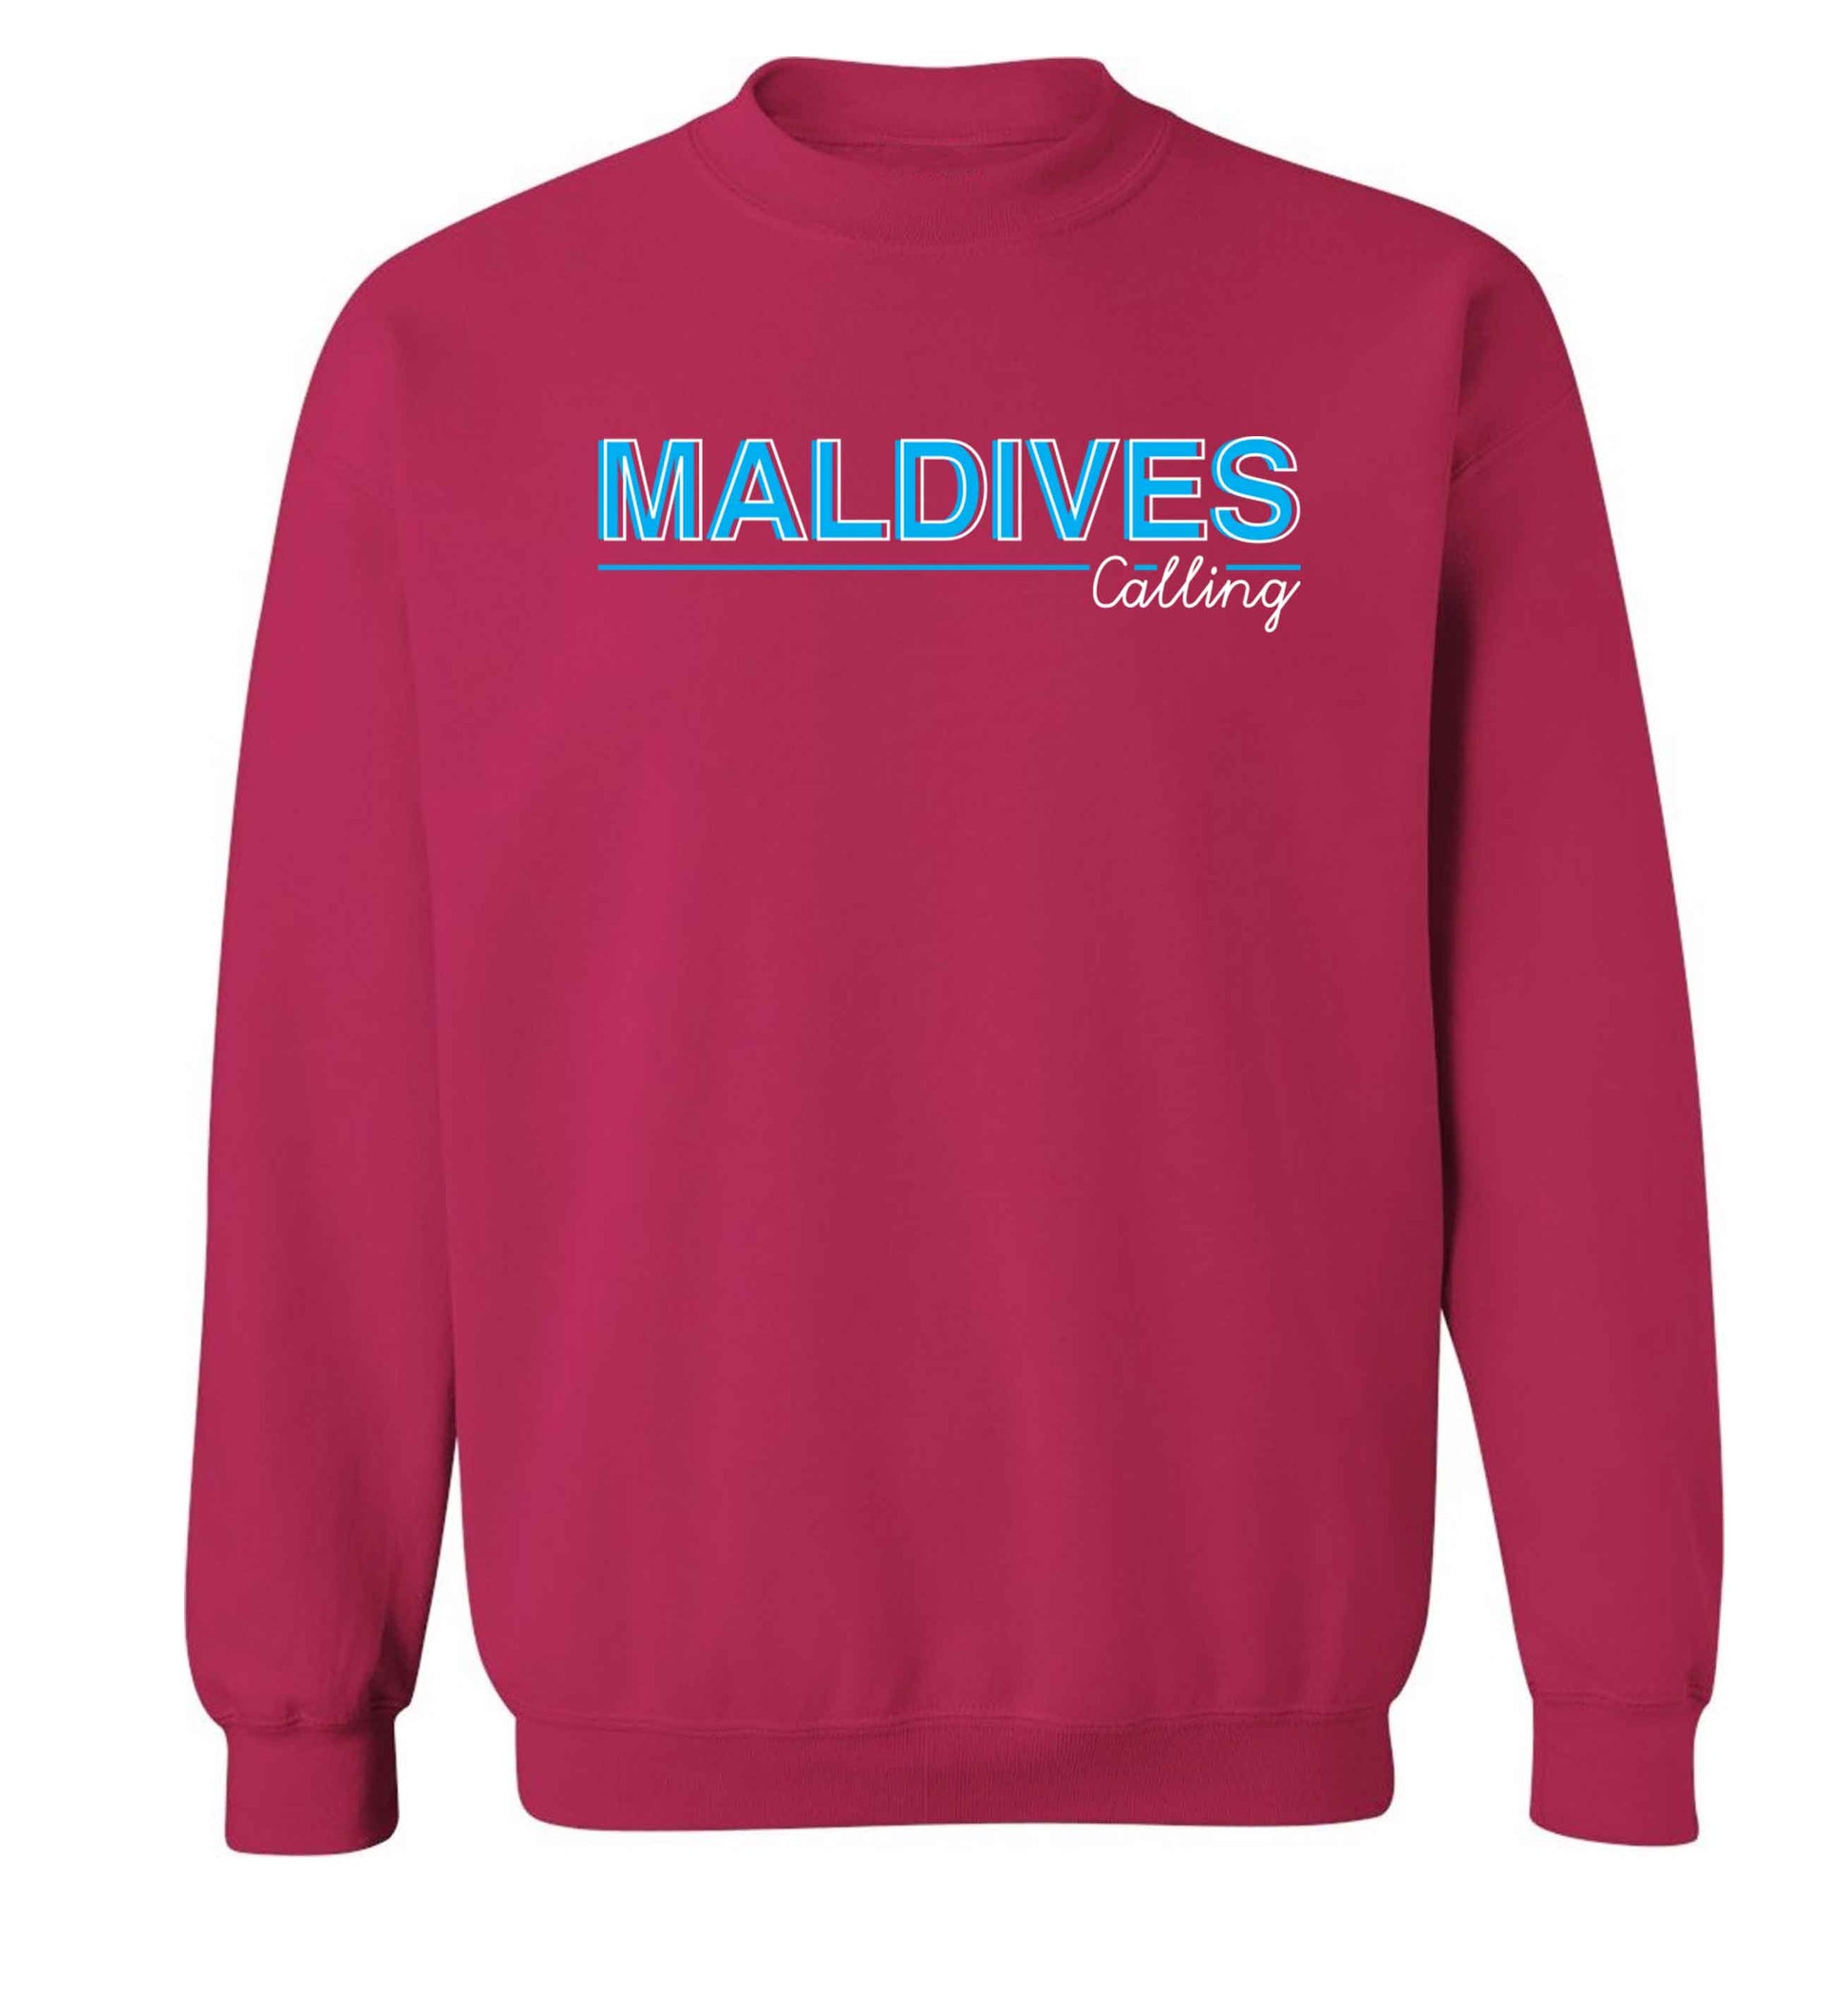 Maldives calling Adult's unisex pink Sweater 2XL